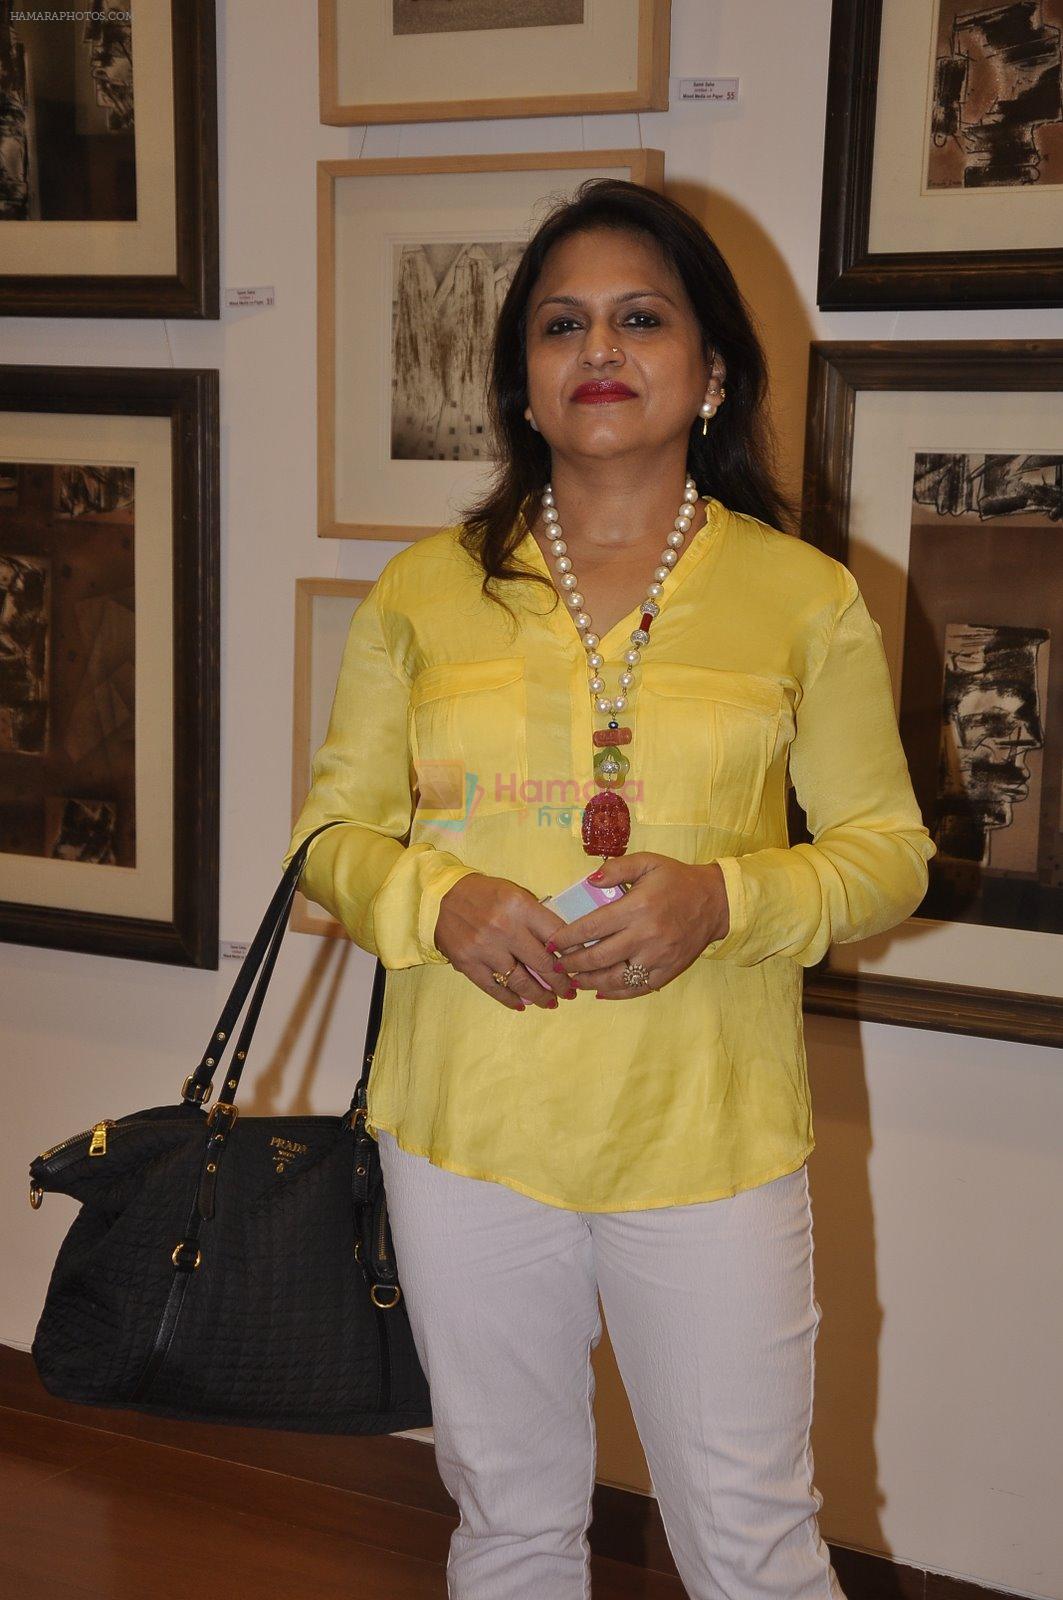 Ananya Banejee graces group art show in nehru on 4th Nov 2014